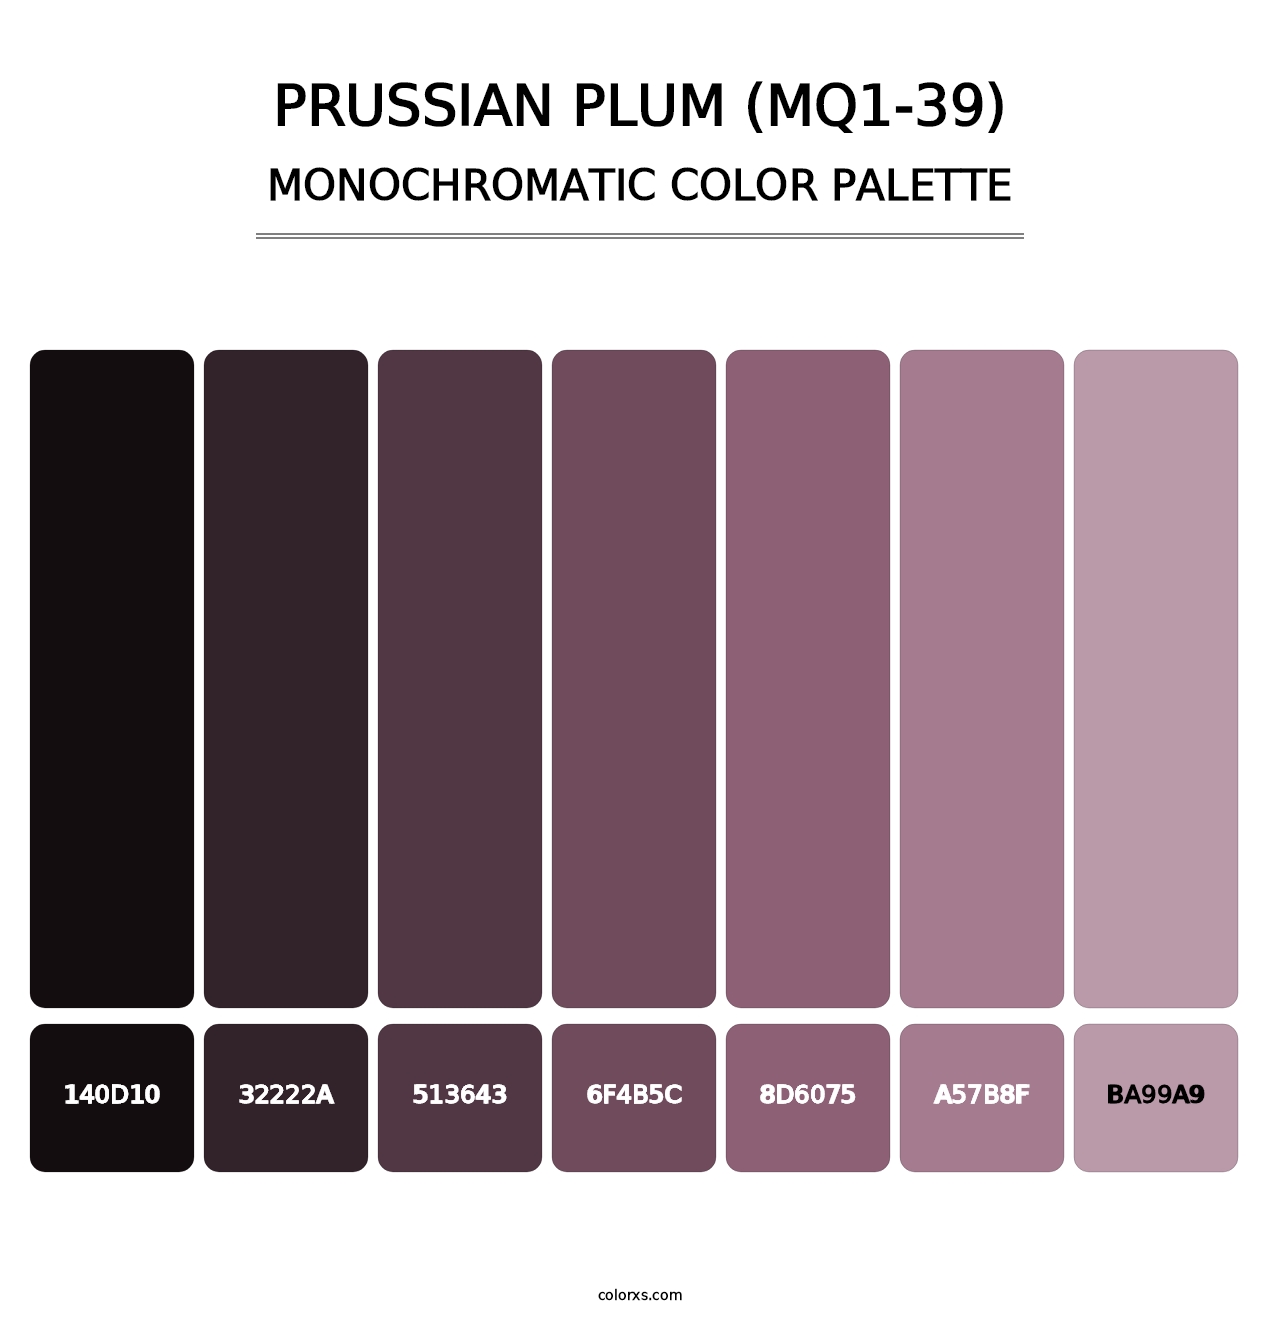 Prussian Plum (MQ1-39) - Monochromatic Color Palette